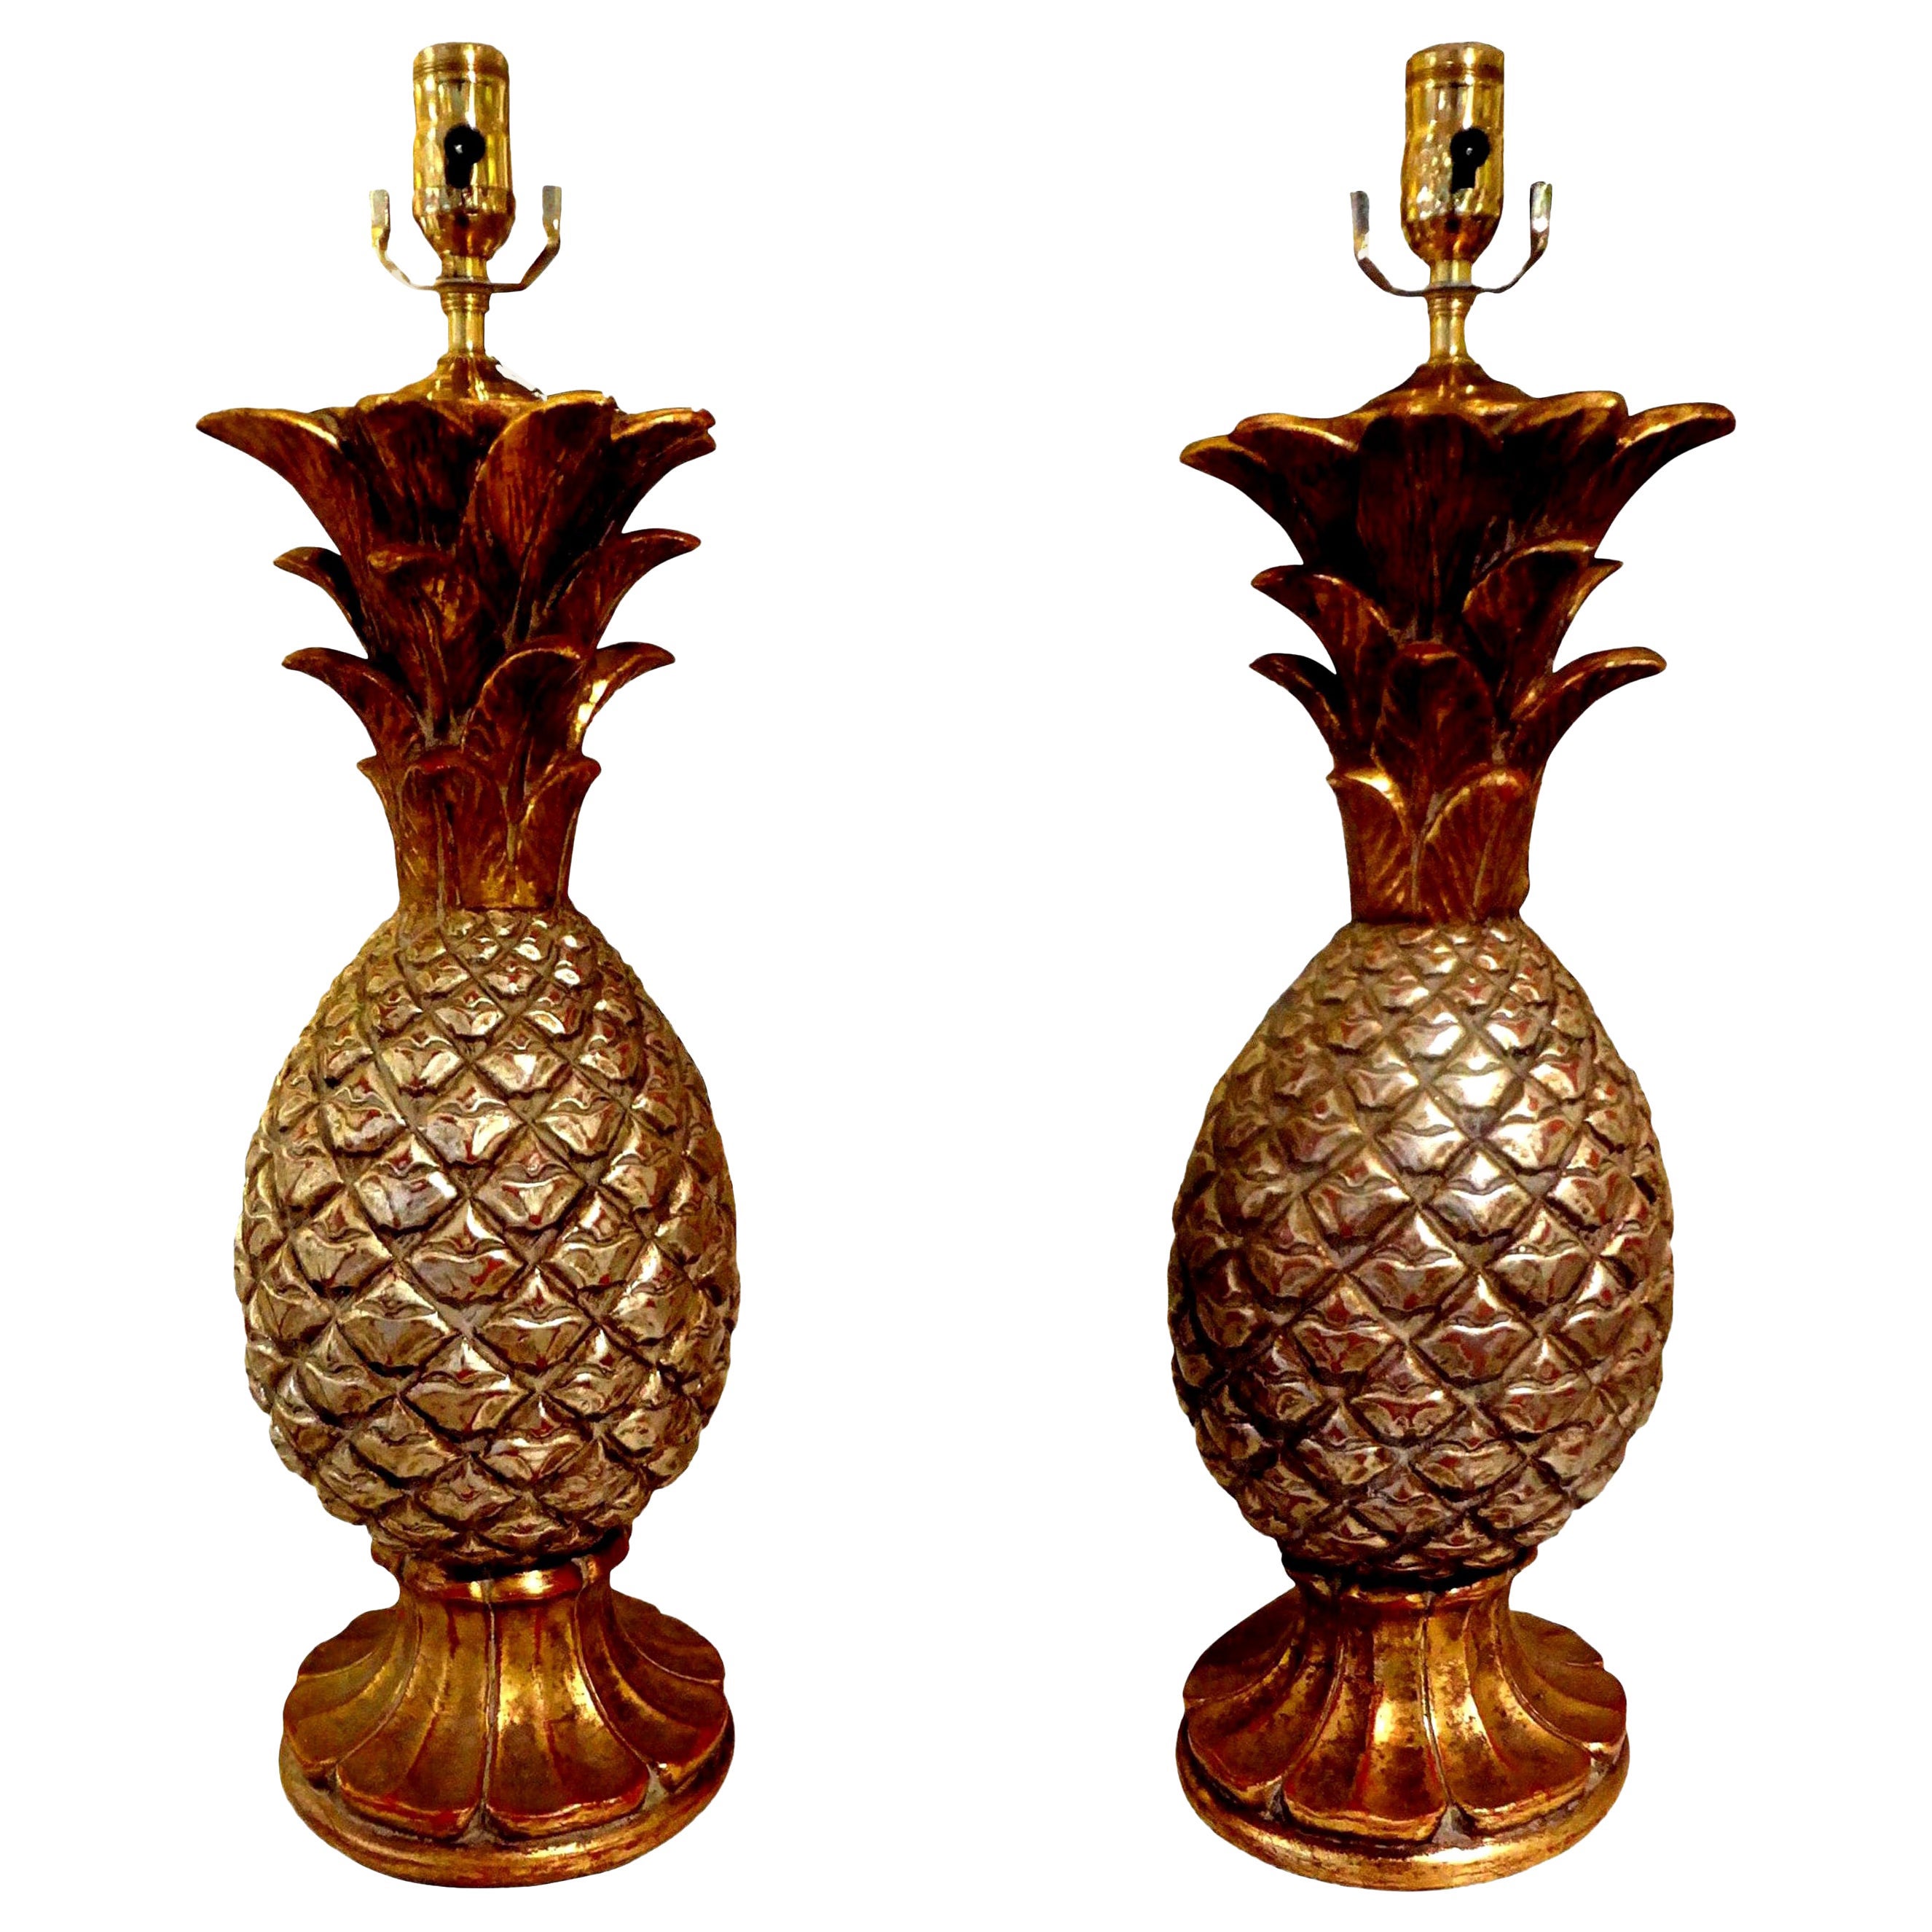 Paire de lampes ananas italiennes vintage en terre cuite dorée en vente